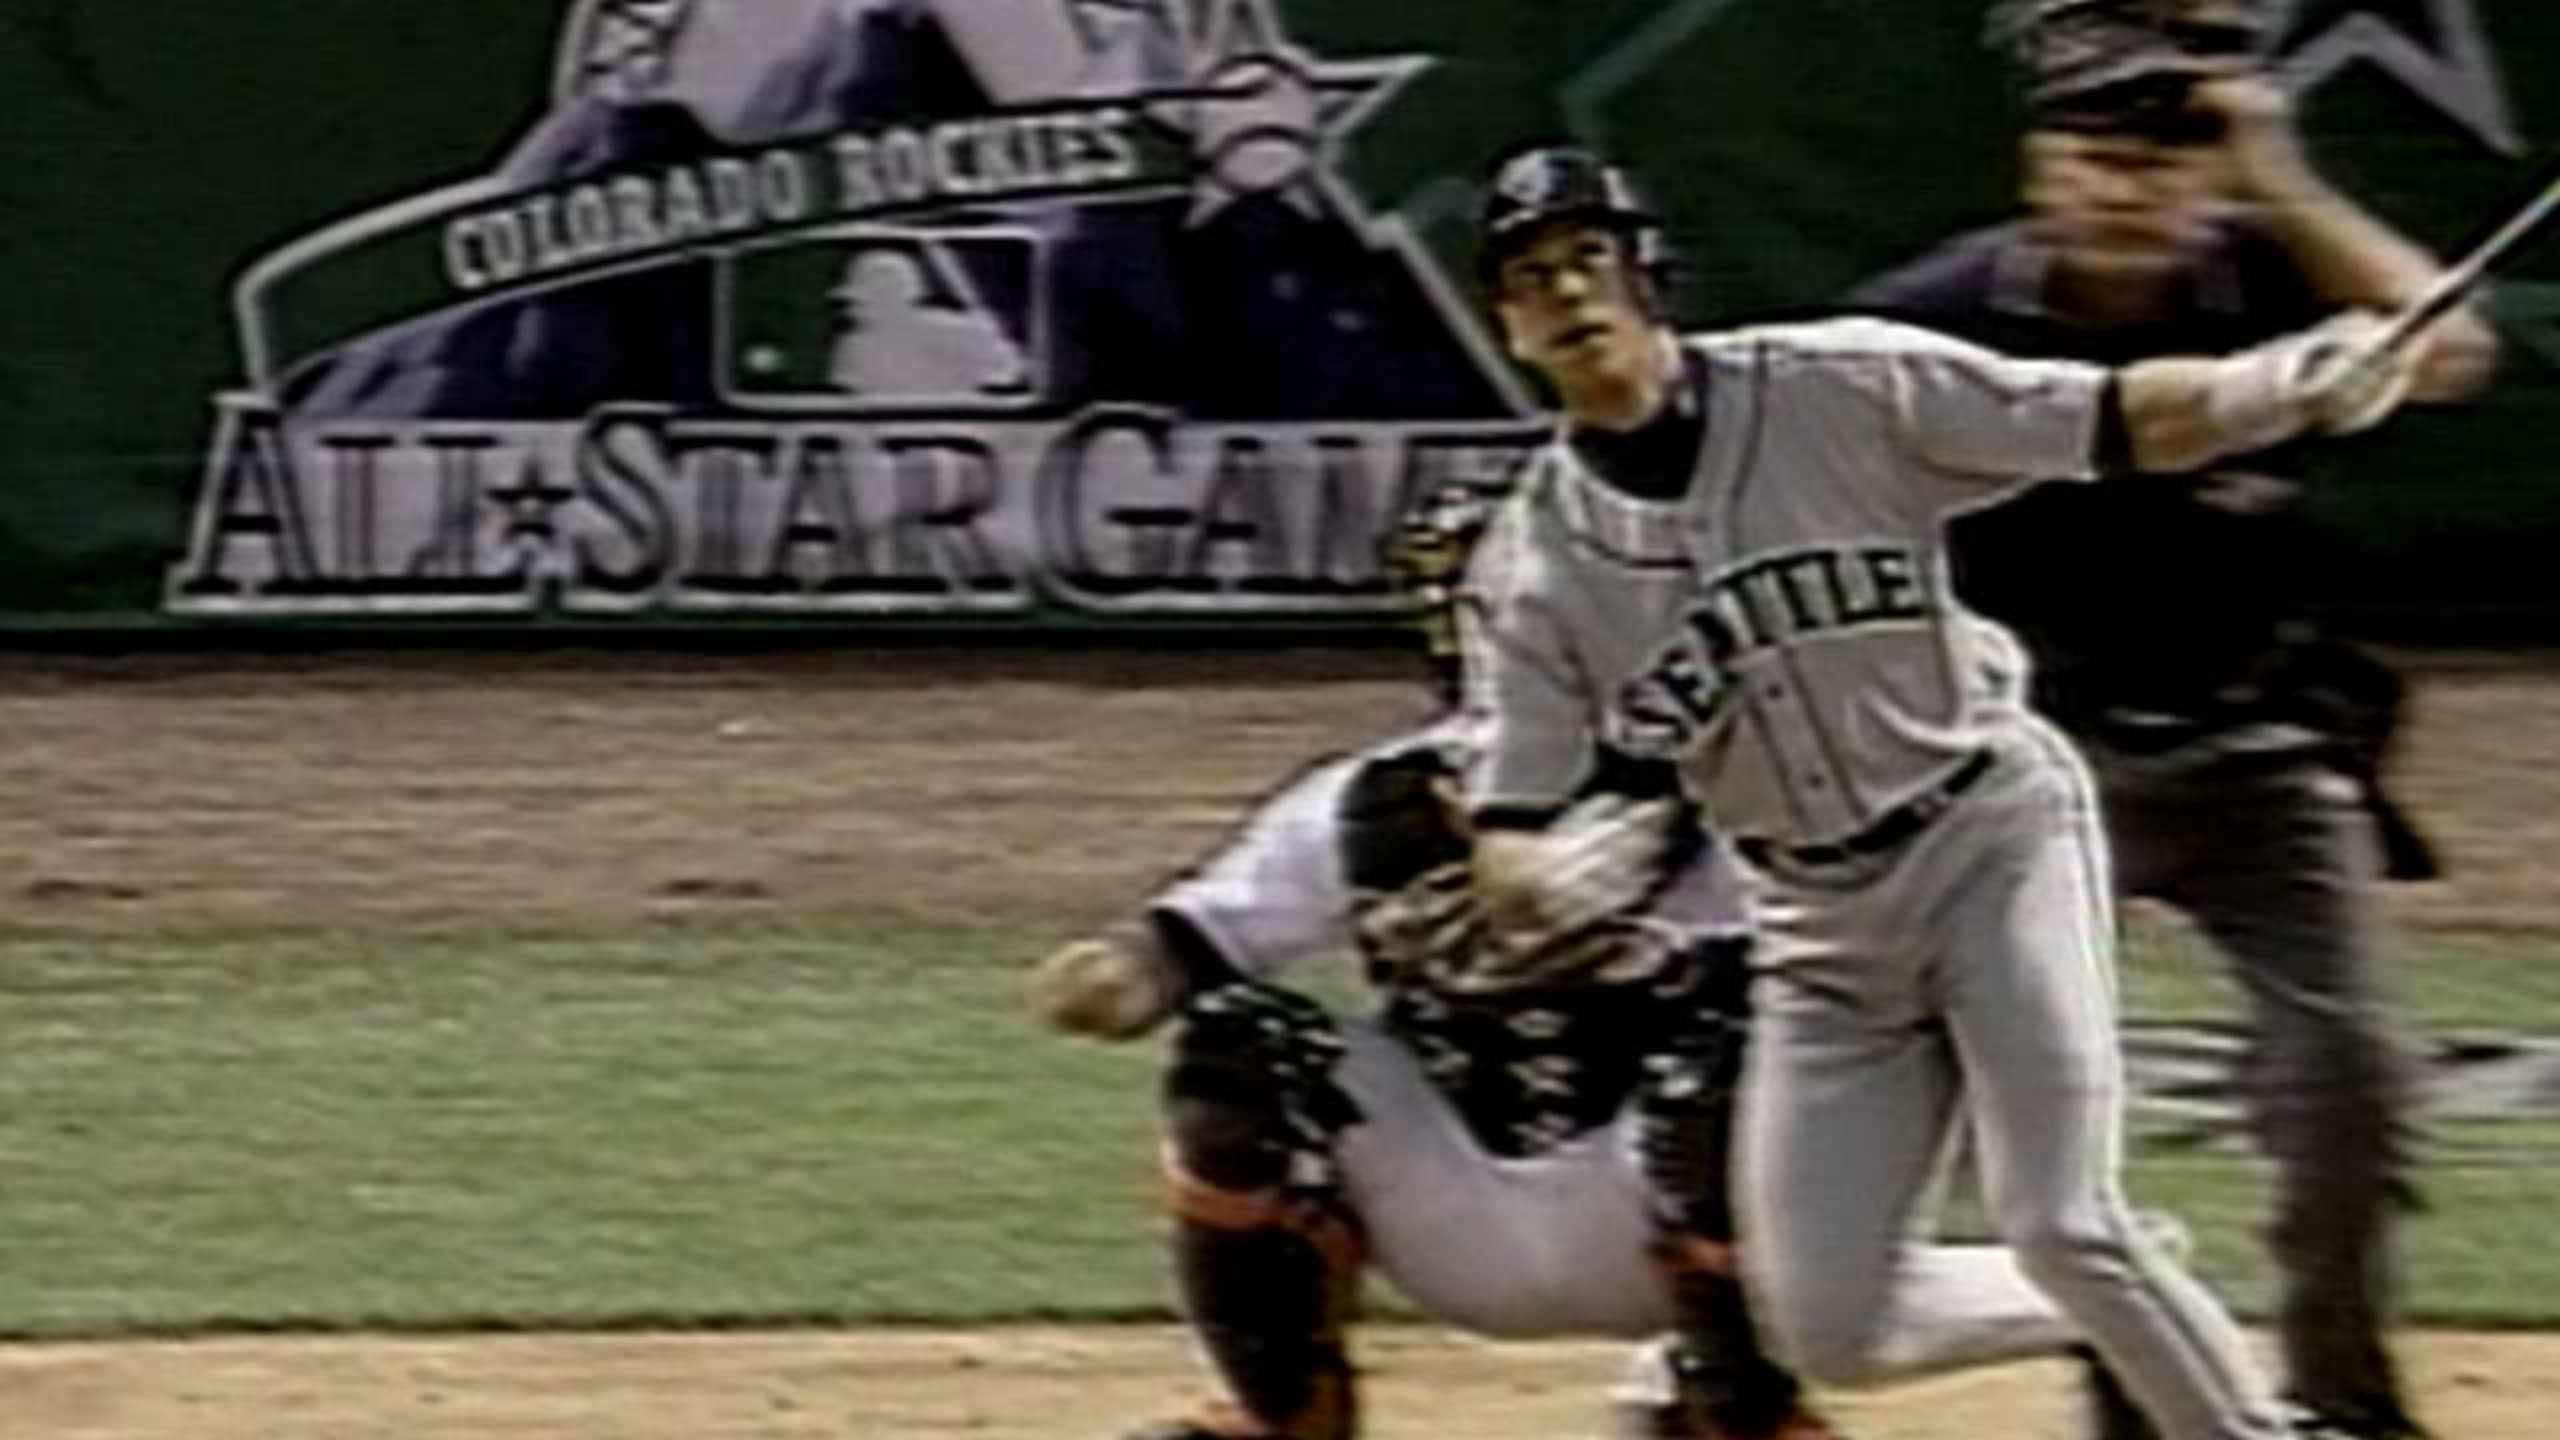 1998 Yankees Diary, June 23: Glavine glides through Yankee lineup